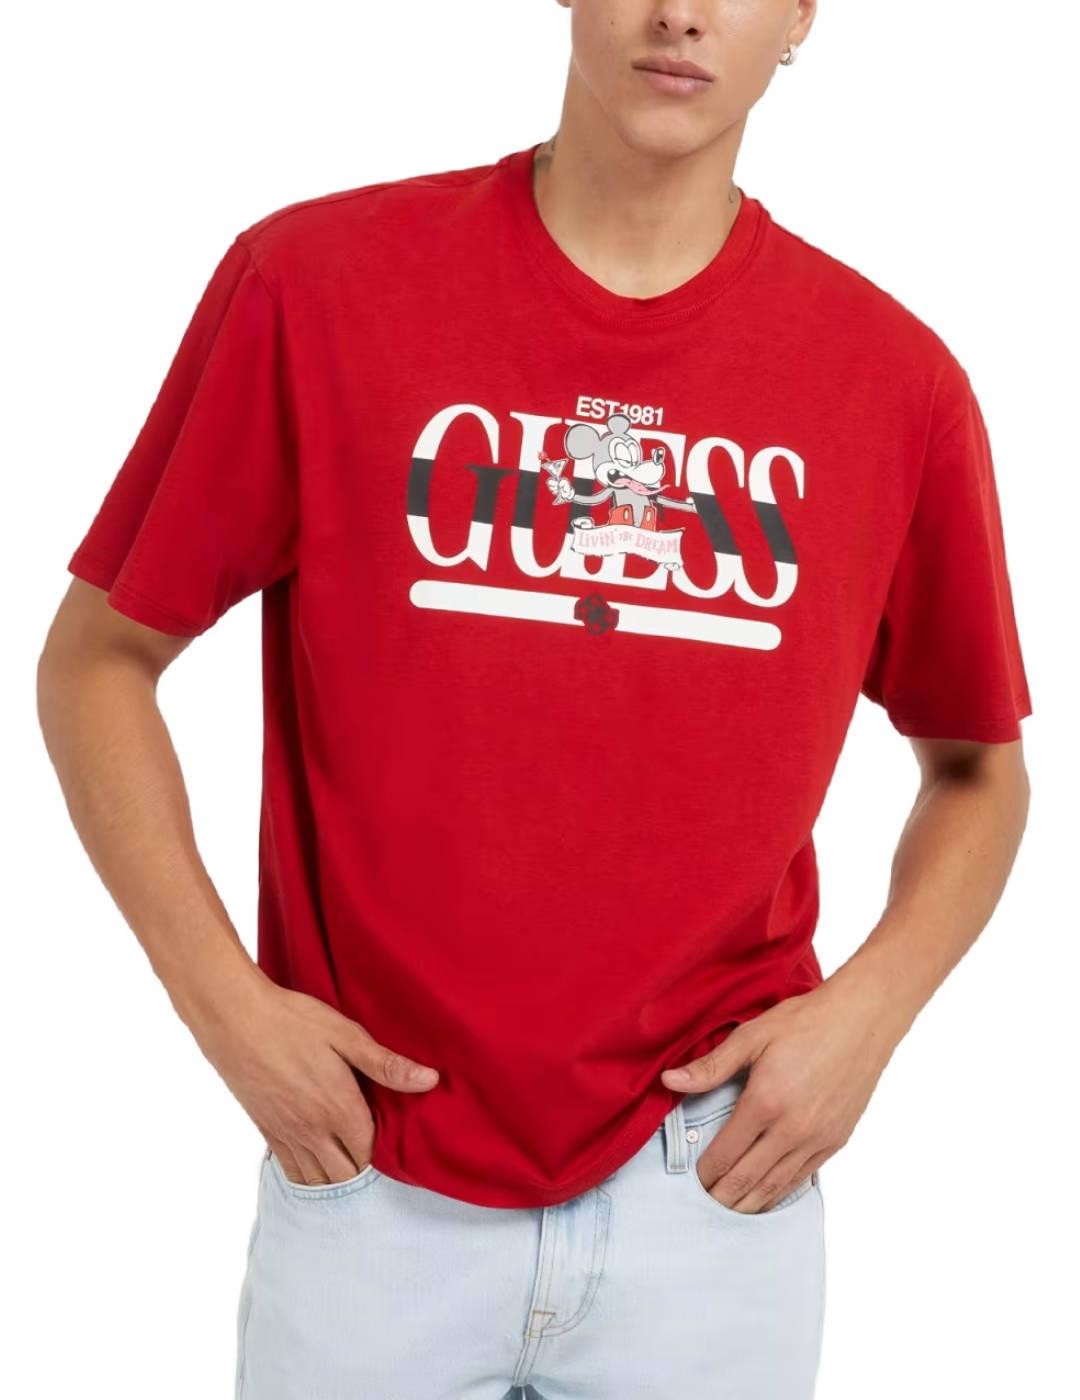 Camiseta Guess The Dream rojo manga corta para hombre